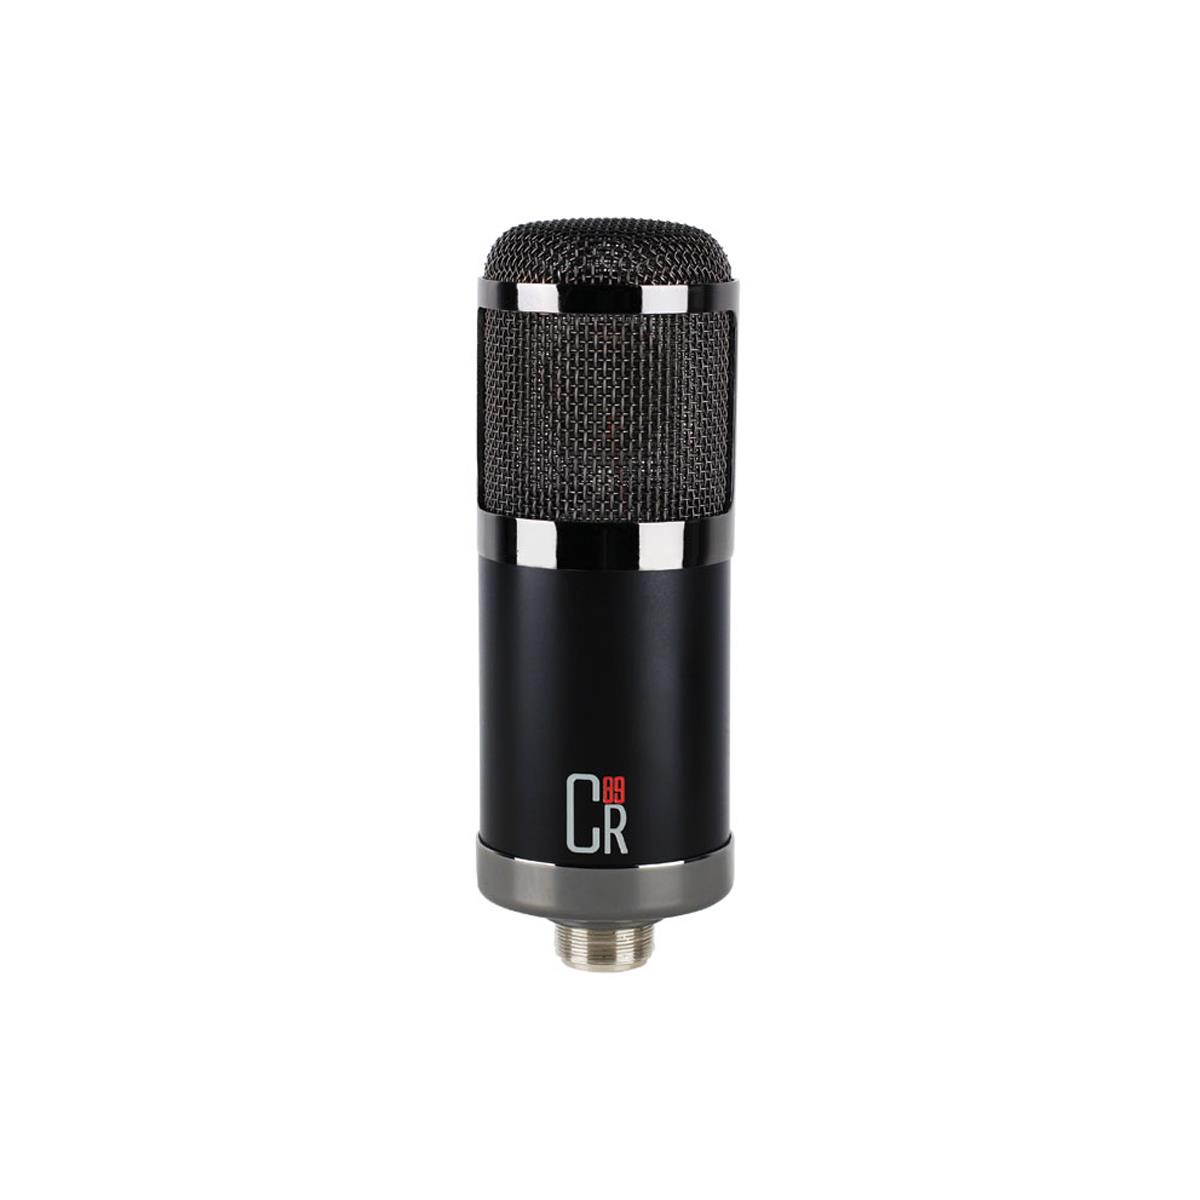 Large Diaphram Low Noise Cardioid Condenser Microphone - MXL CR89